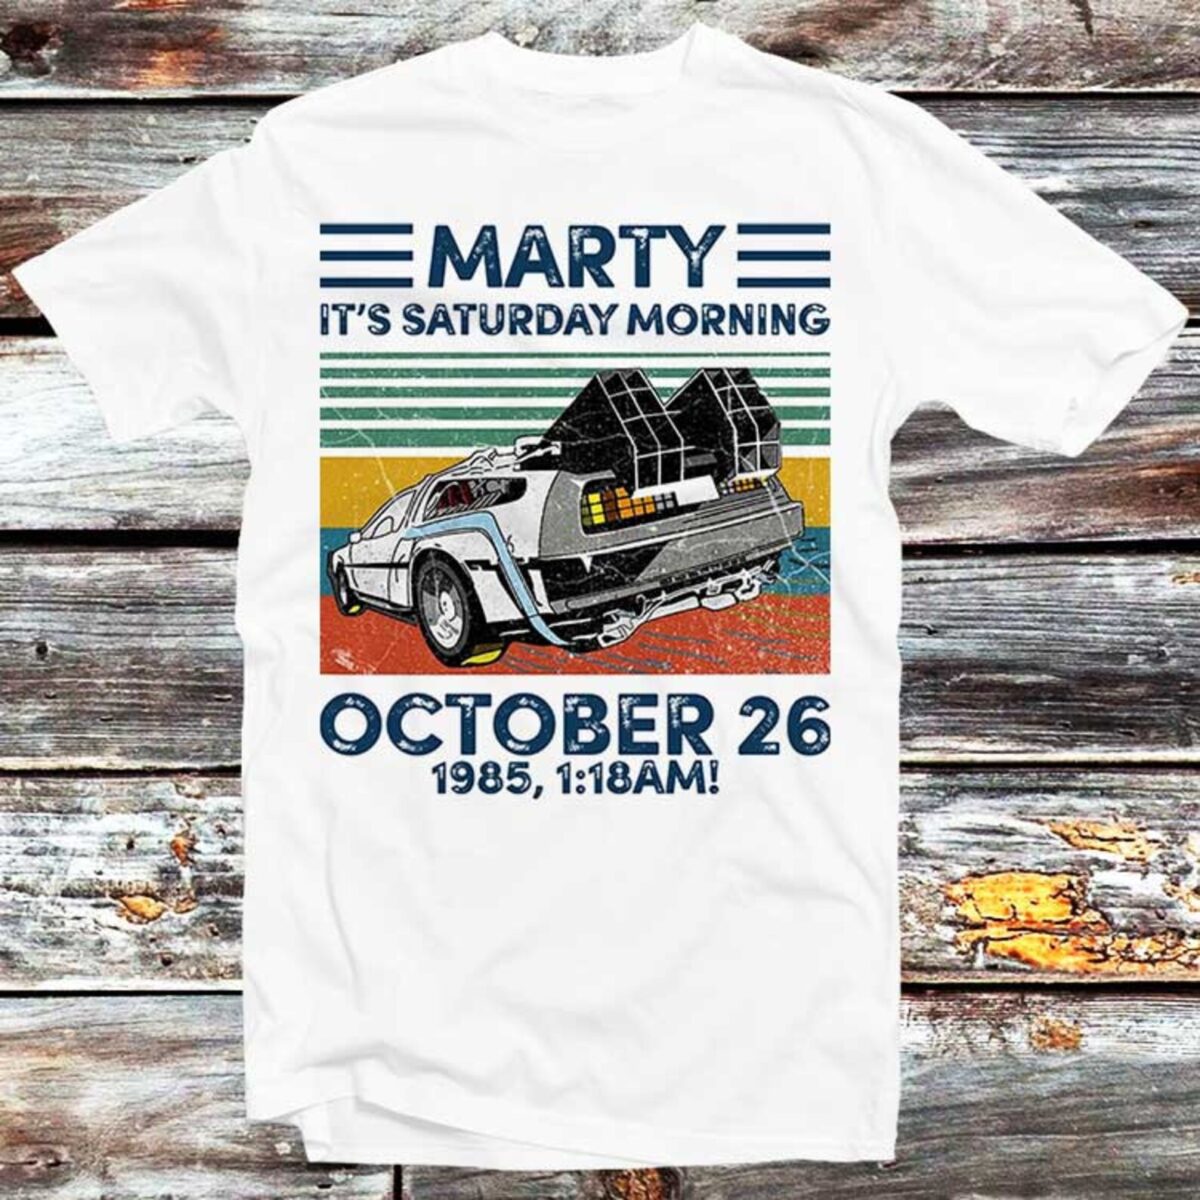 Marty It’s Saturday morning t-shirt